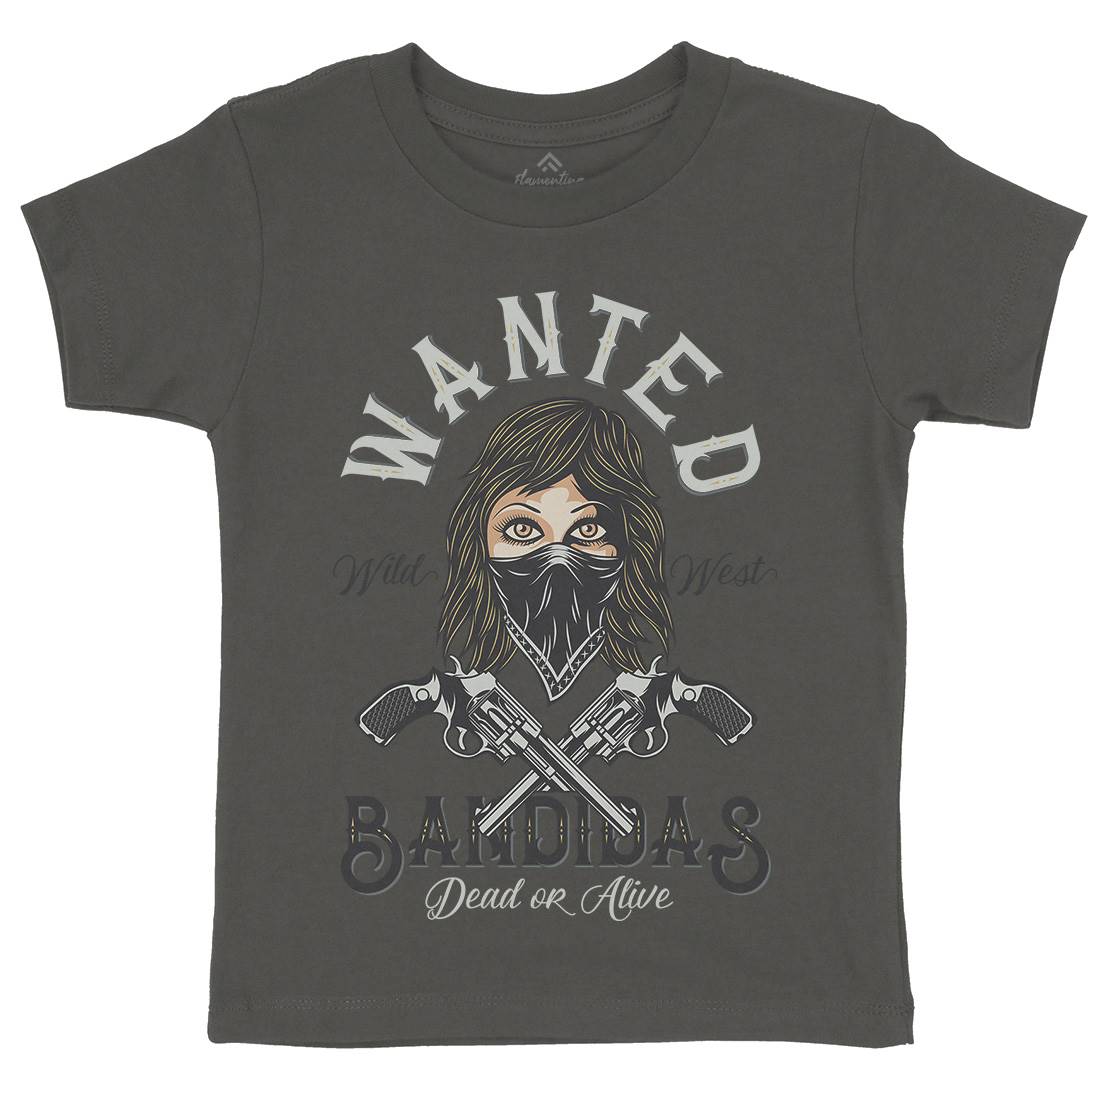 Wanted Bandidas Kids Crew Neck T-Shirt Retro D995